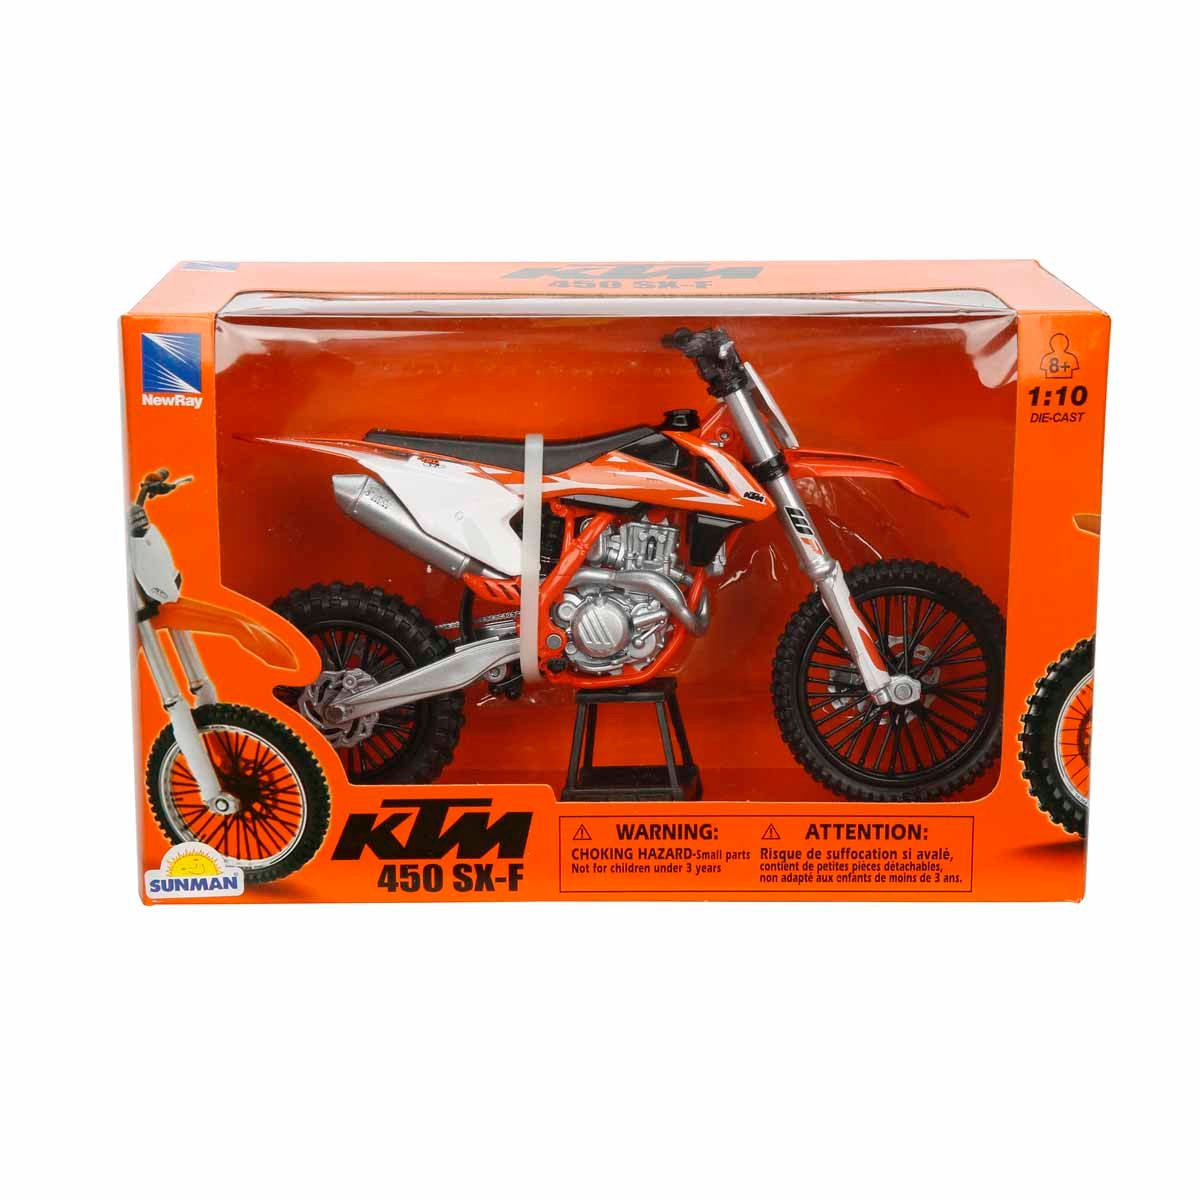 Motocicleta metalica, New Ray, KTM 450 SX-F 2018, 1:10